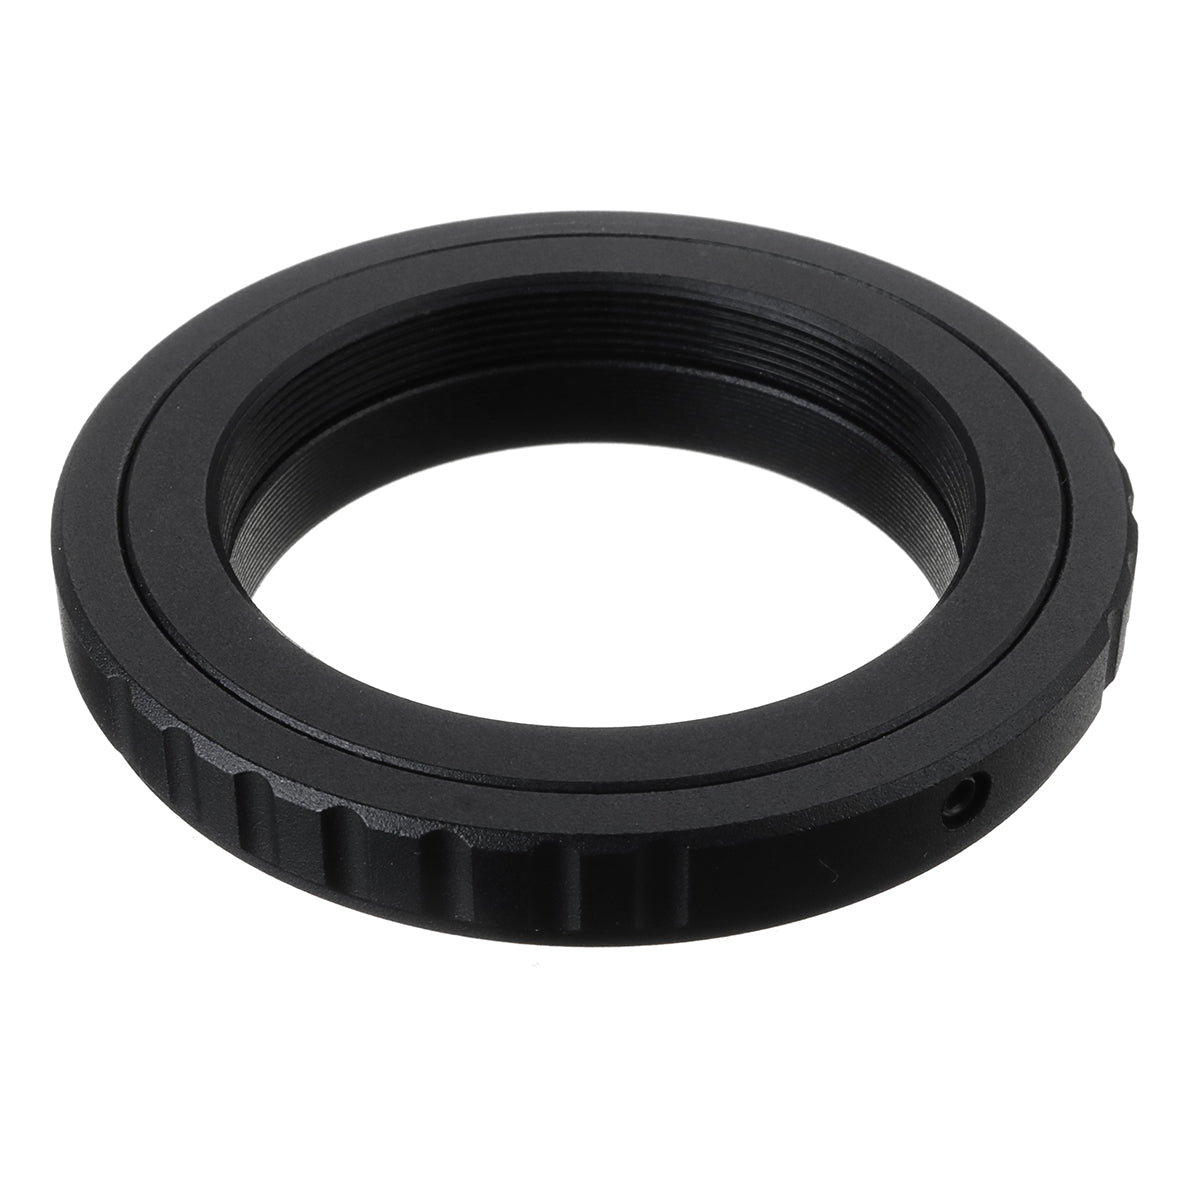 Telescope Adapter Extension Tube T Ring 1.25 Inch for Nikon DSLR Cameras Lens